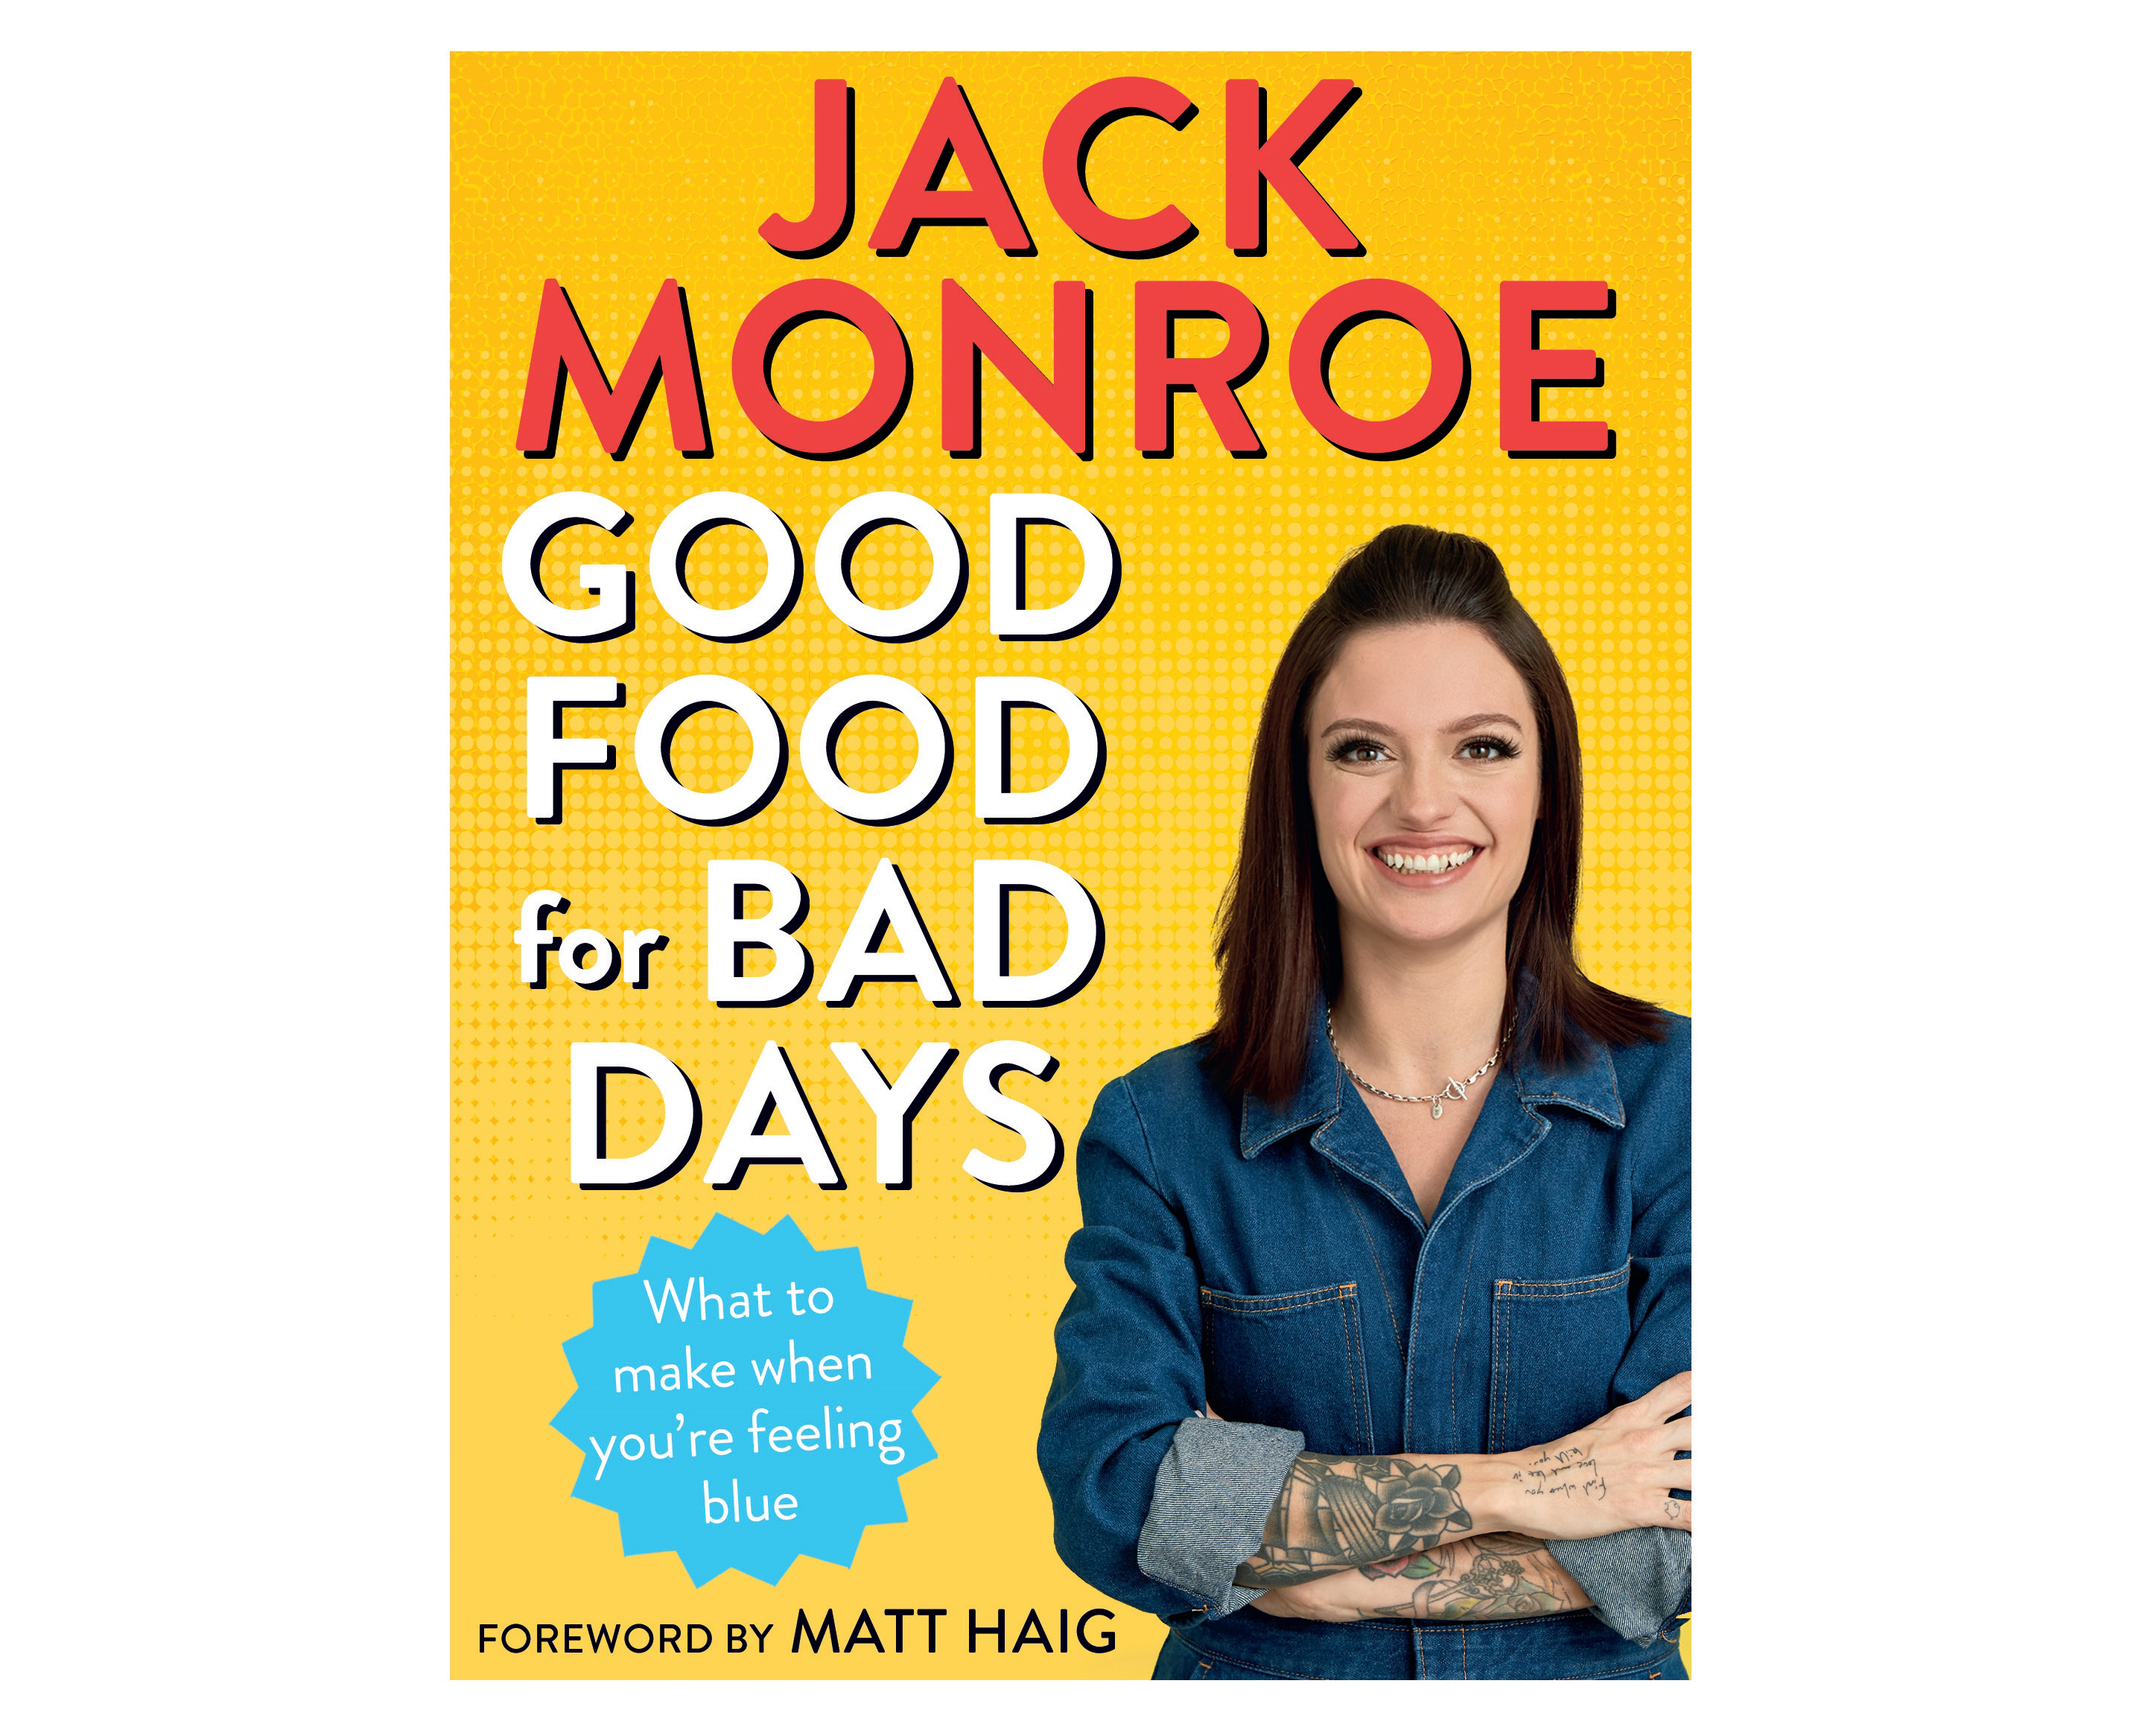 Jack Monroe's Good Food for Bad Days